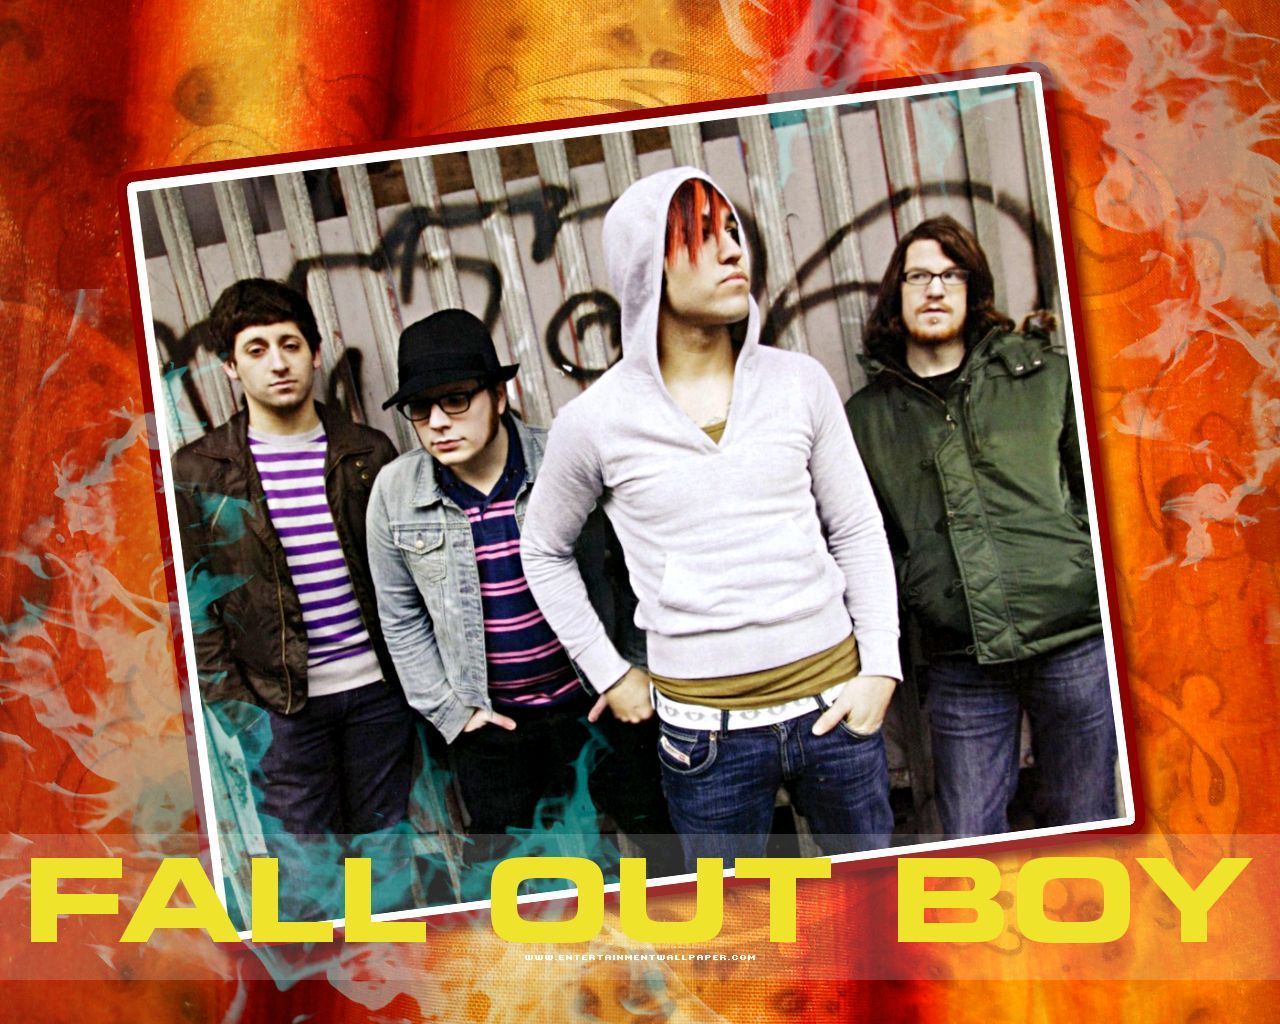 FallOutBoy♥ - Fall Out Boy Wallpaper (6458421) - Fanpop